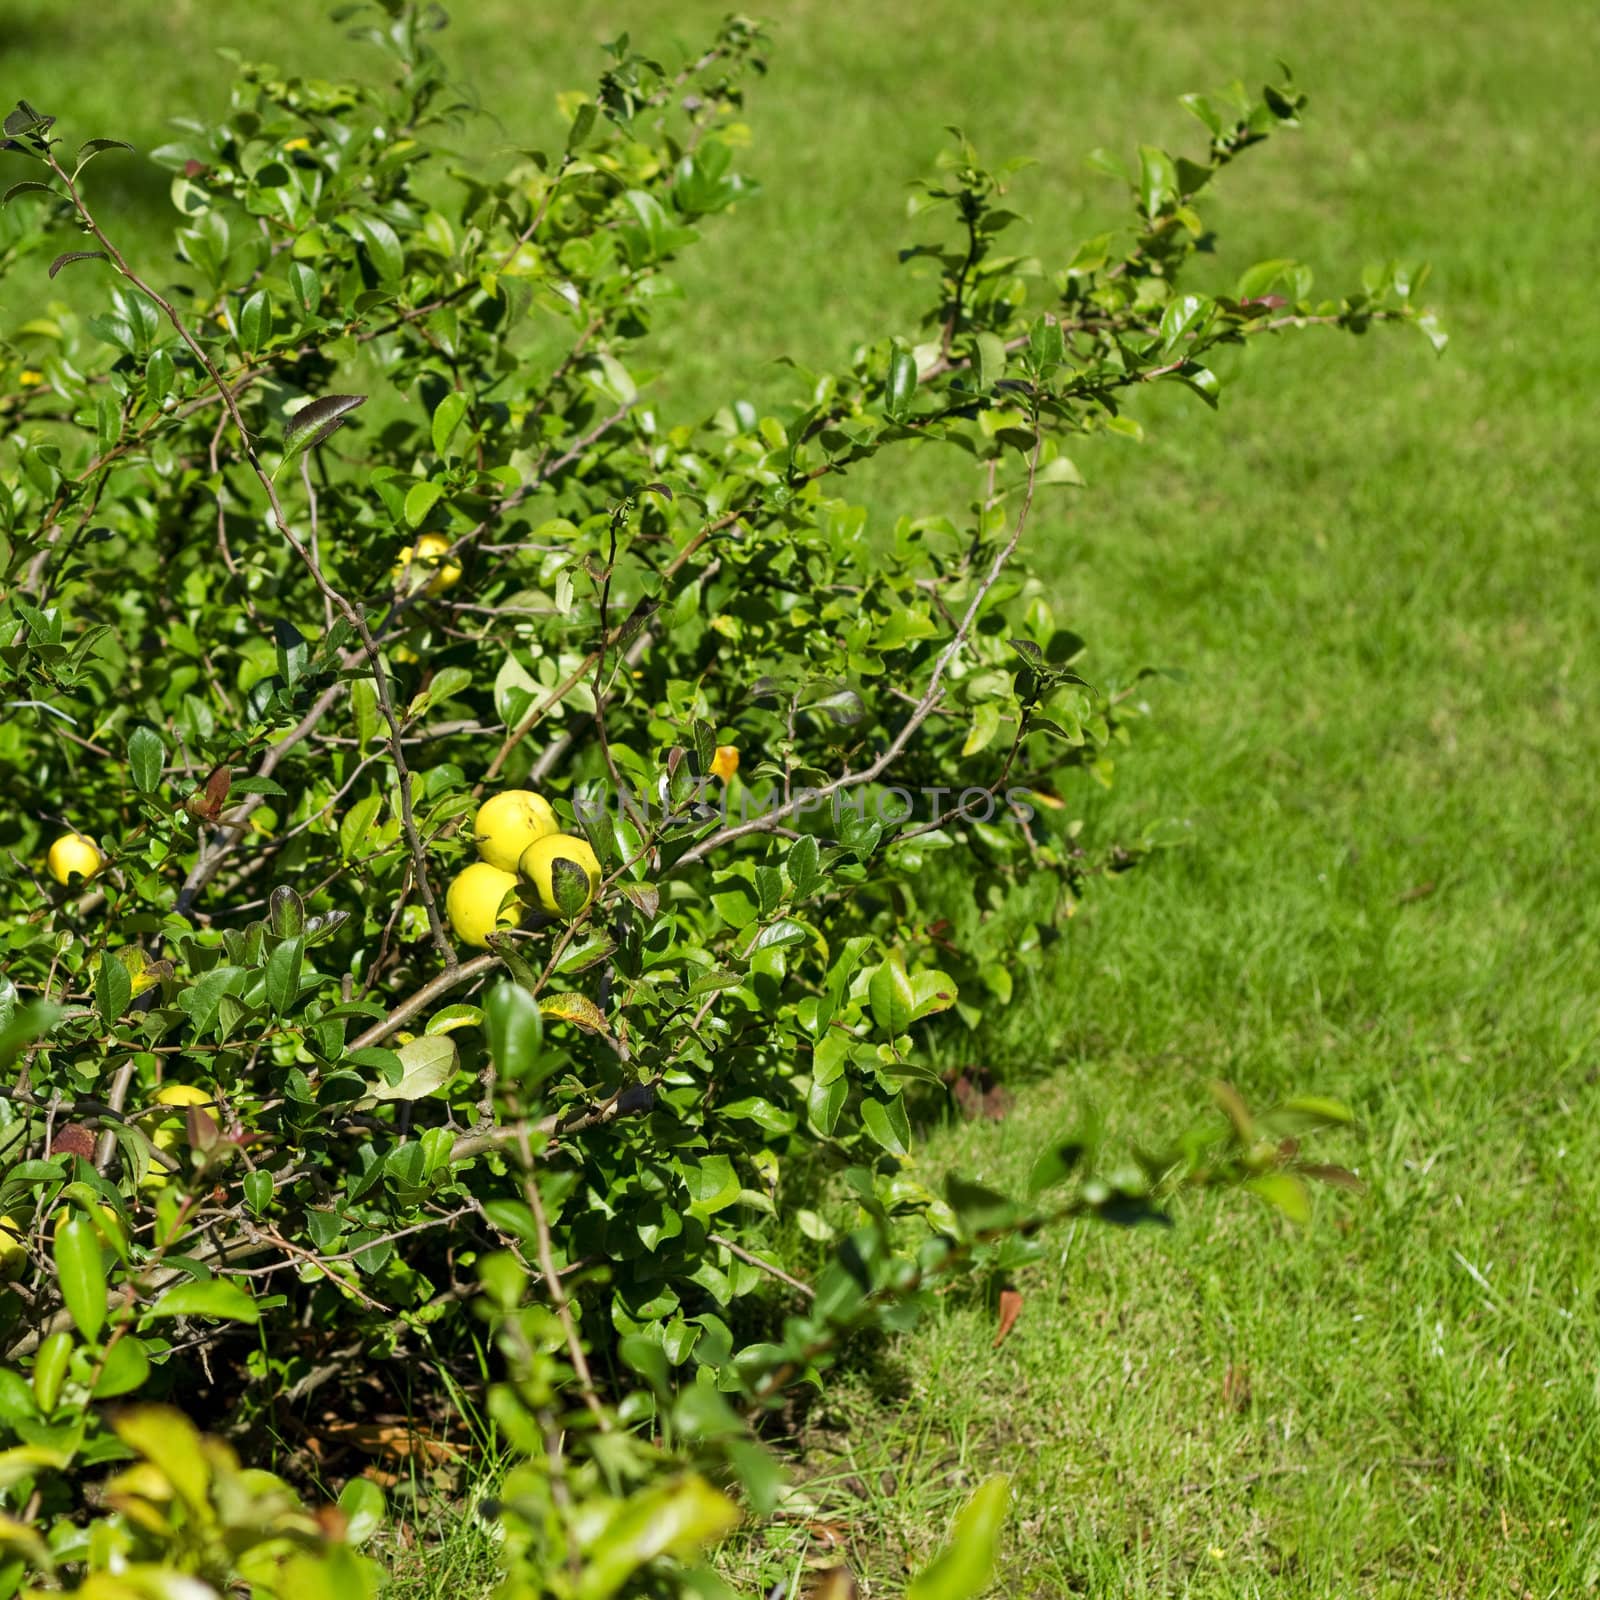 Bush in a summer garden